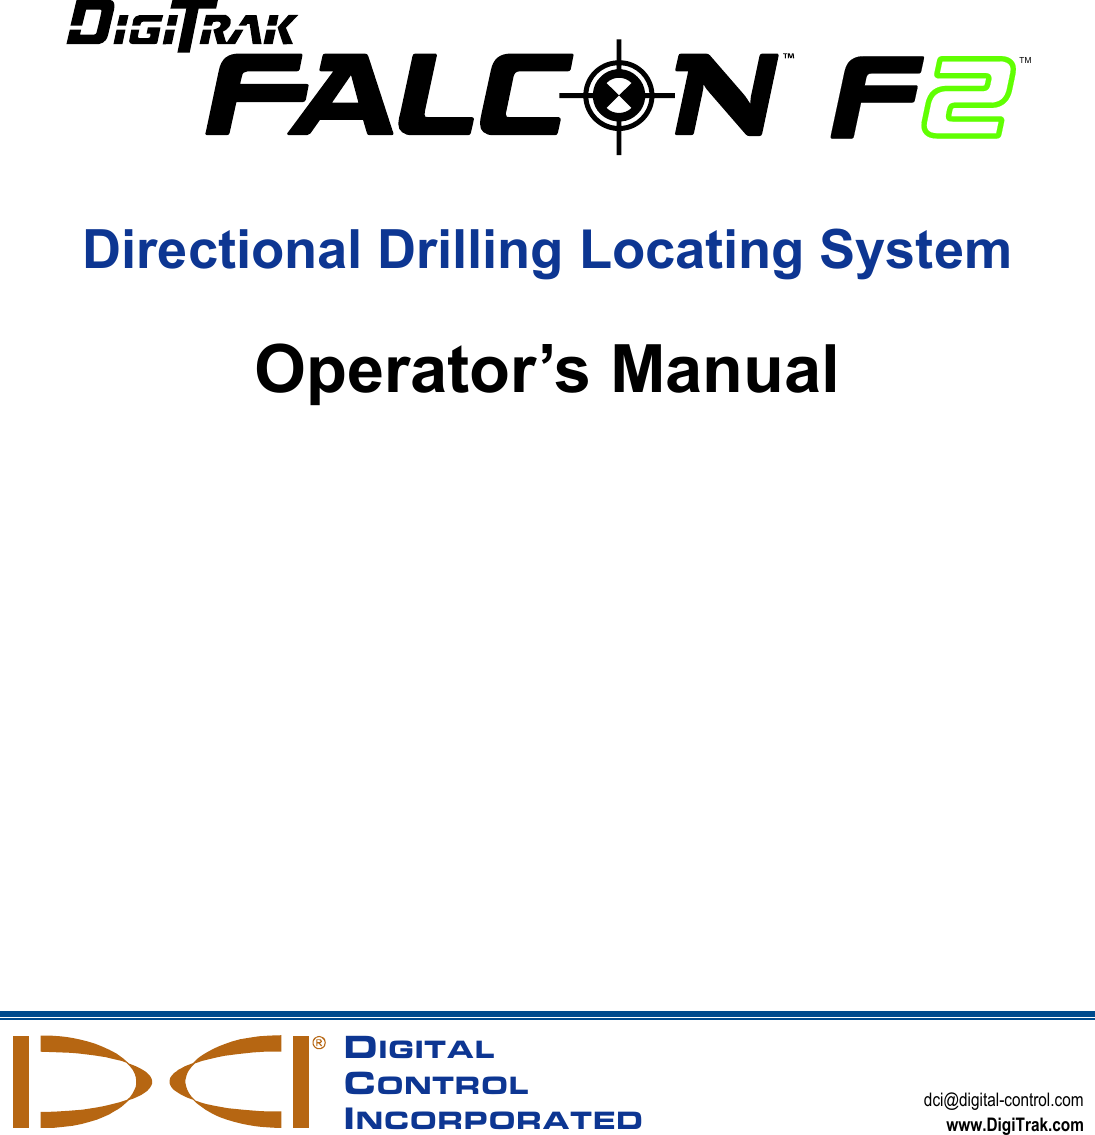     DIGITAL CONTROL INCORPORATED dci@digital-control.com www.DigiTrak.com        TM Directional Drilling Locating System  Operator’s Manual